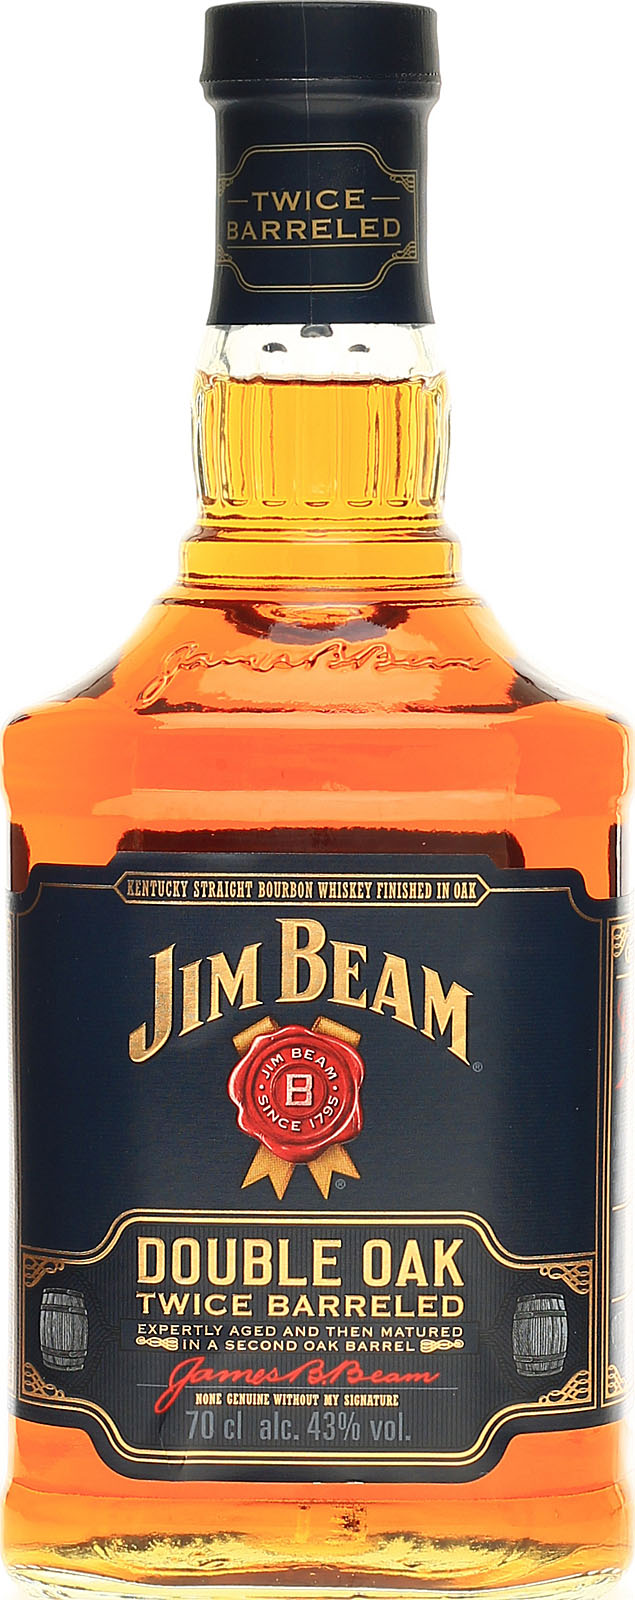 Sh Whisky Beam bei Jim uns Oak Double Twice im Barreled